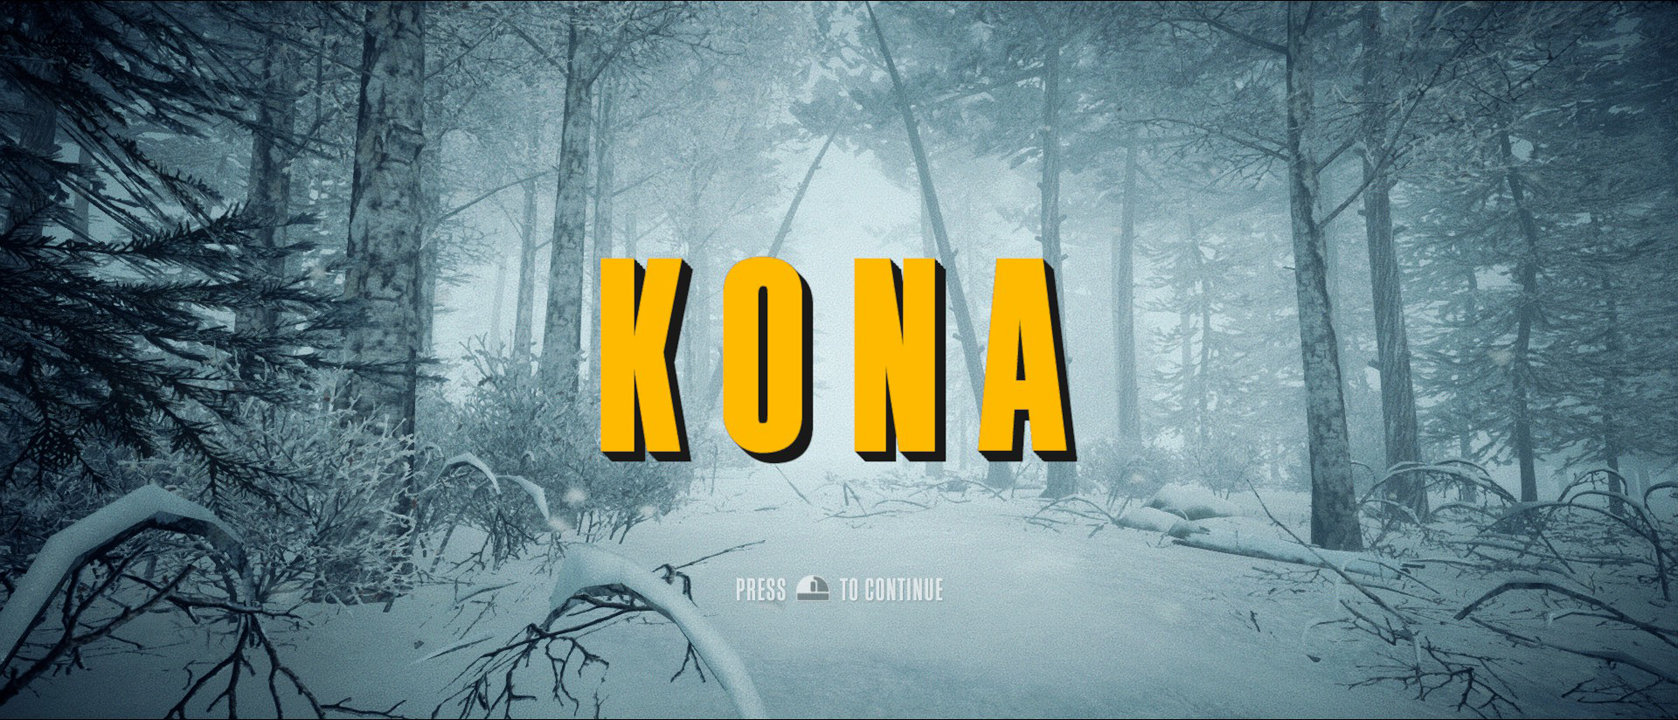 Kona Title Screen